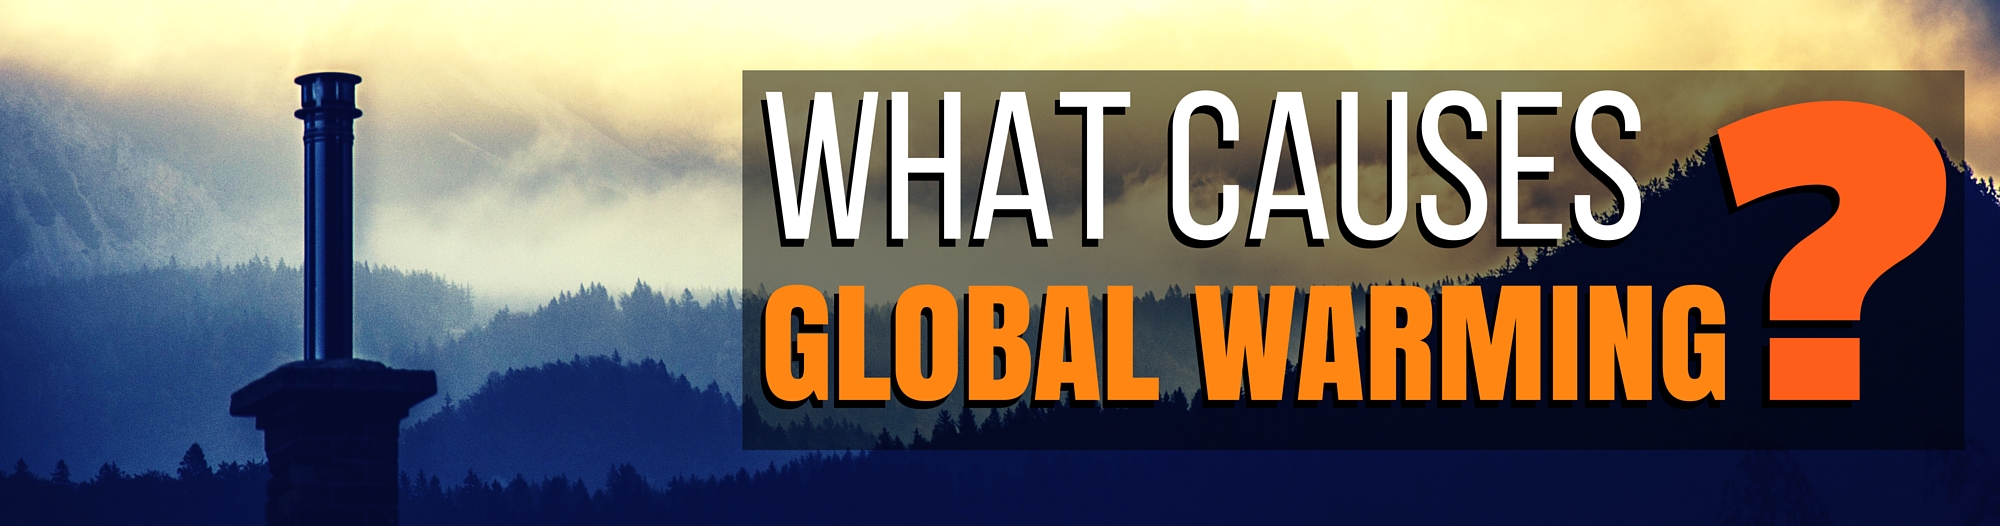 global-warming-causes